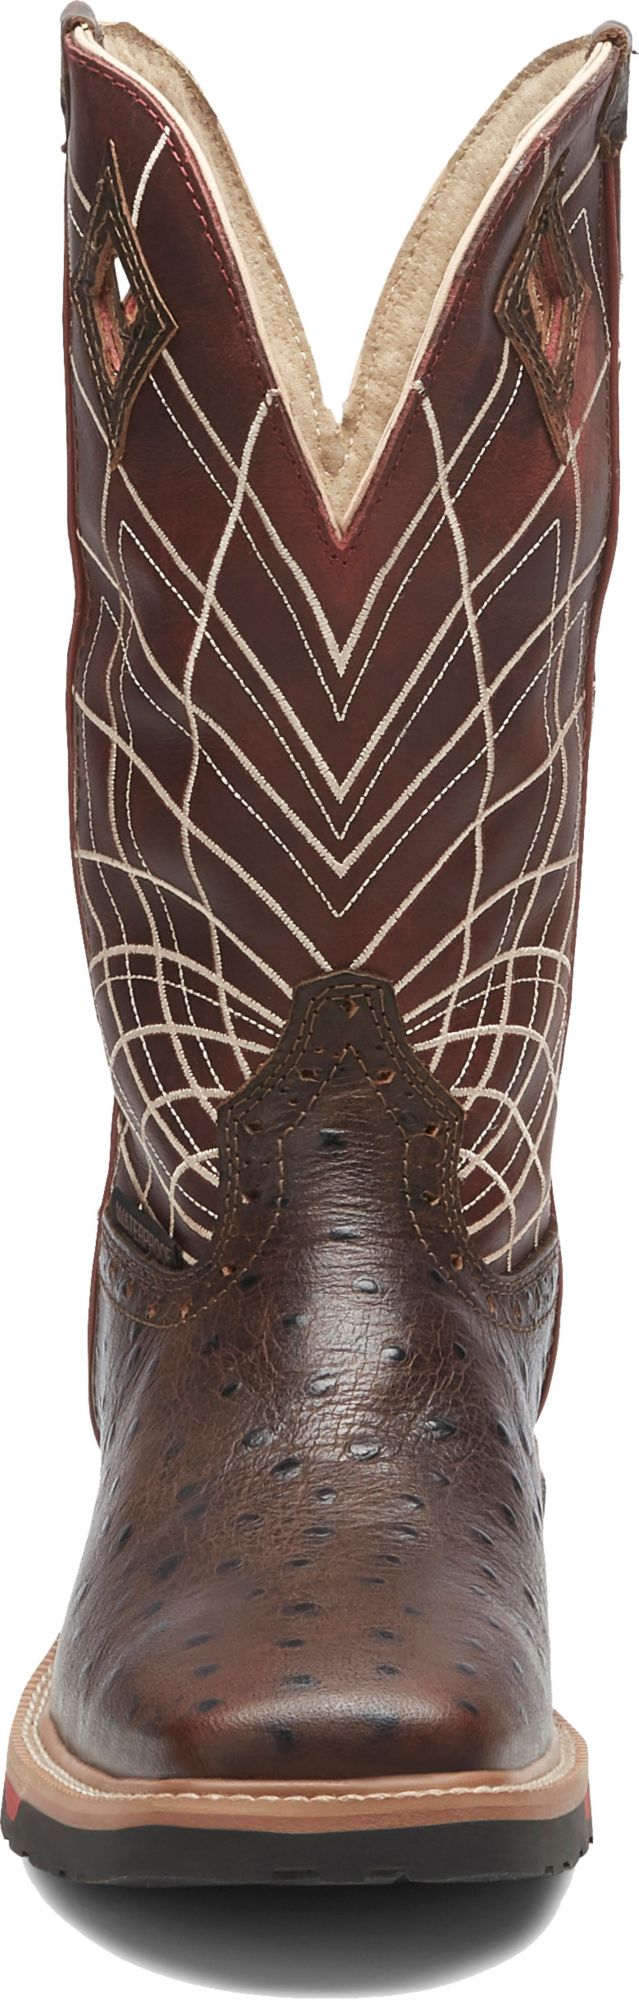 justin men's derrickman ostrich print composite toe work boots